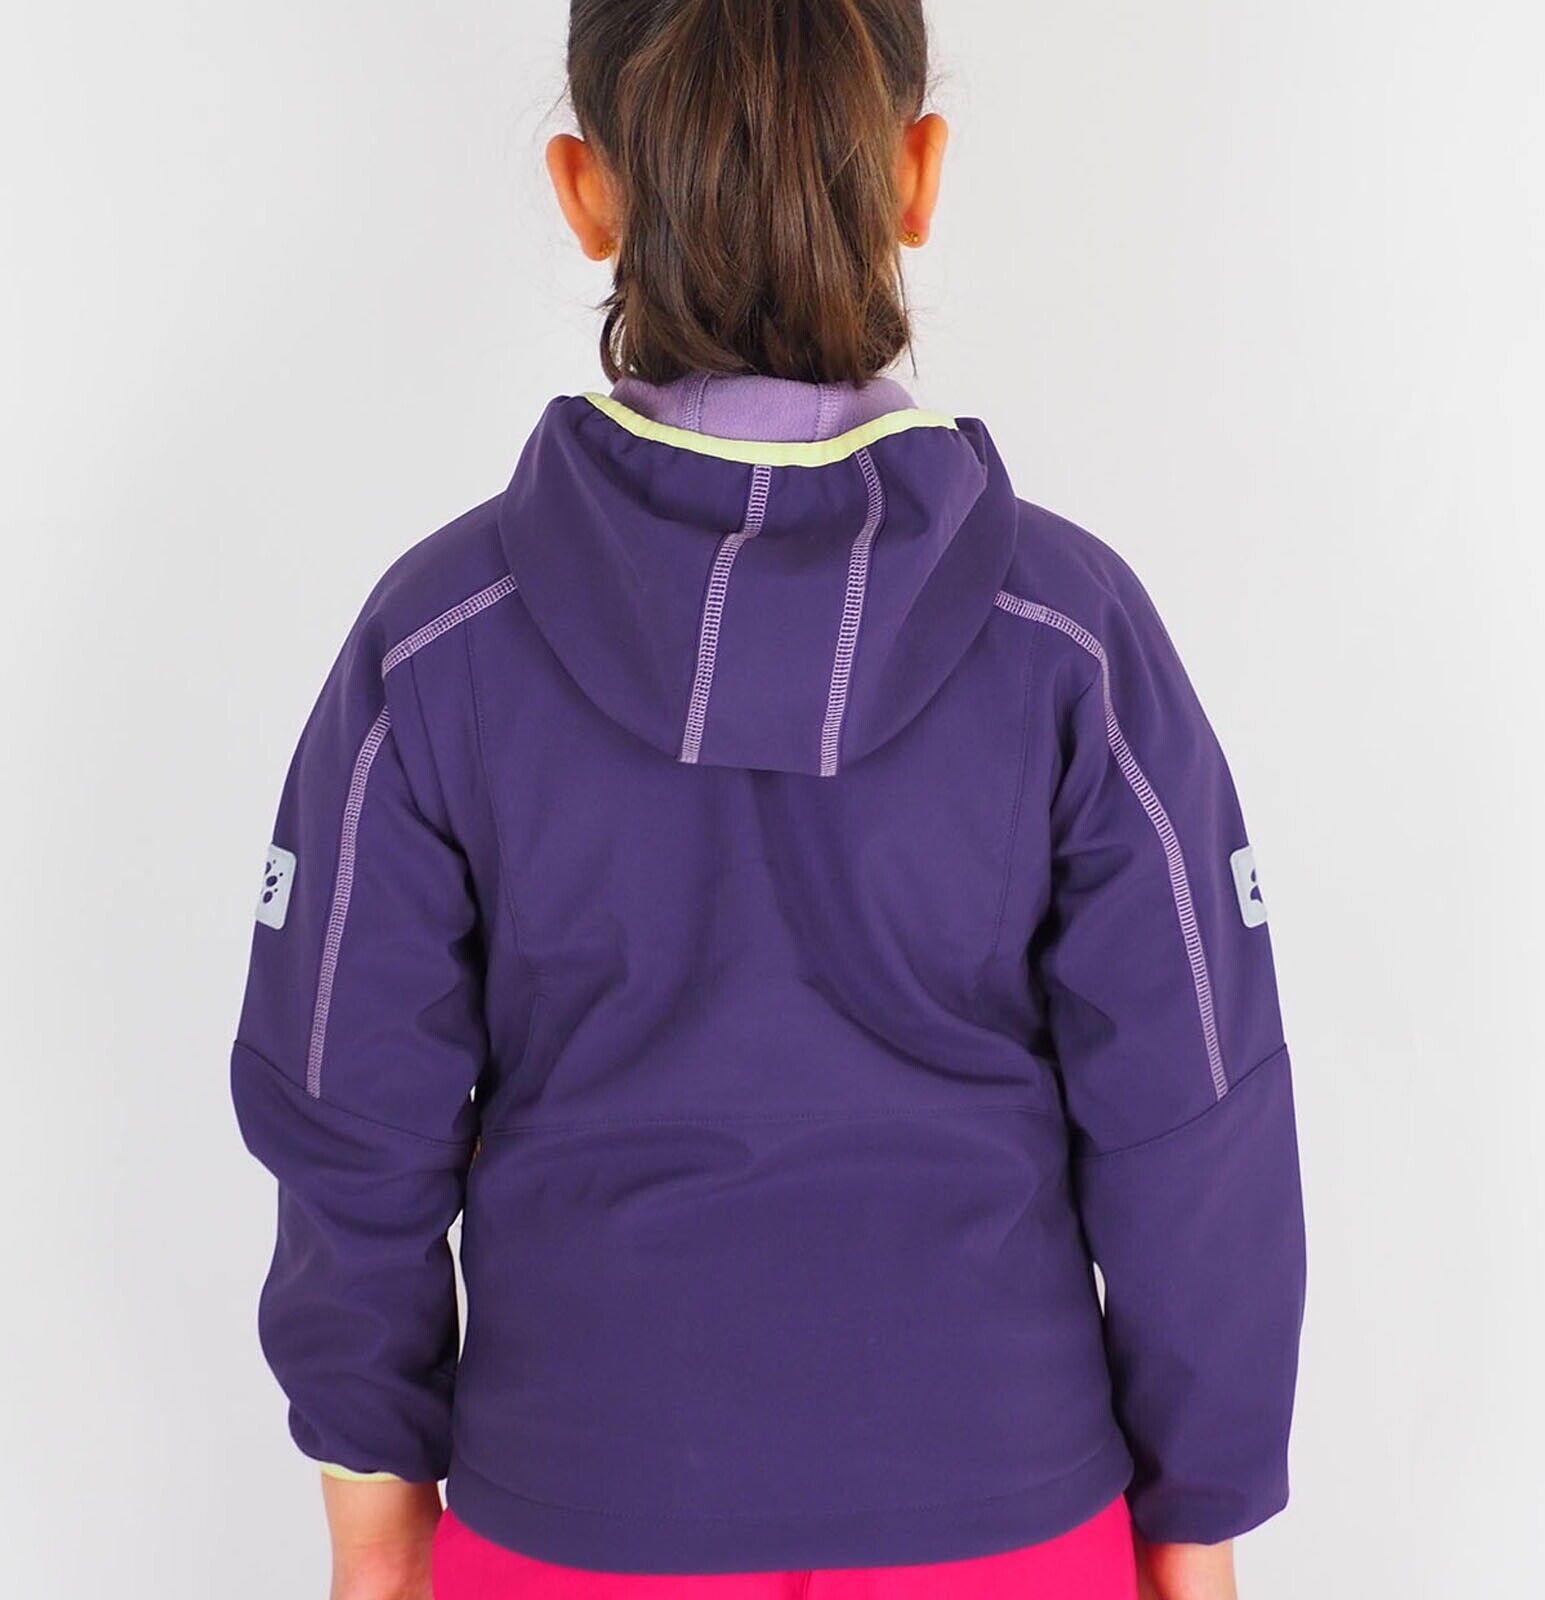 Girls Jack Wolfskin Whirlwind Softshell 1604831 Prune Wind Resistant Jacket - London Top Style